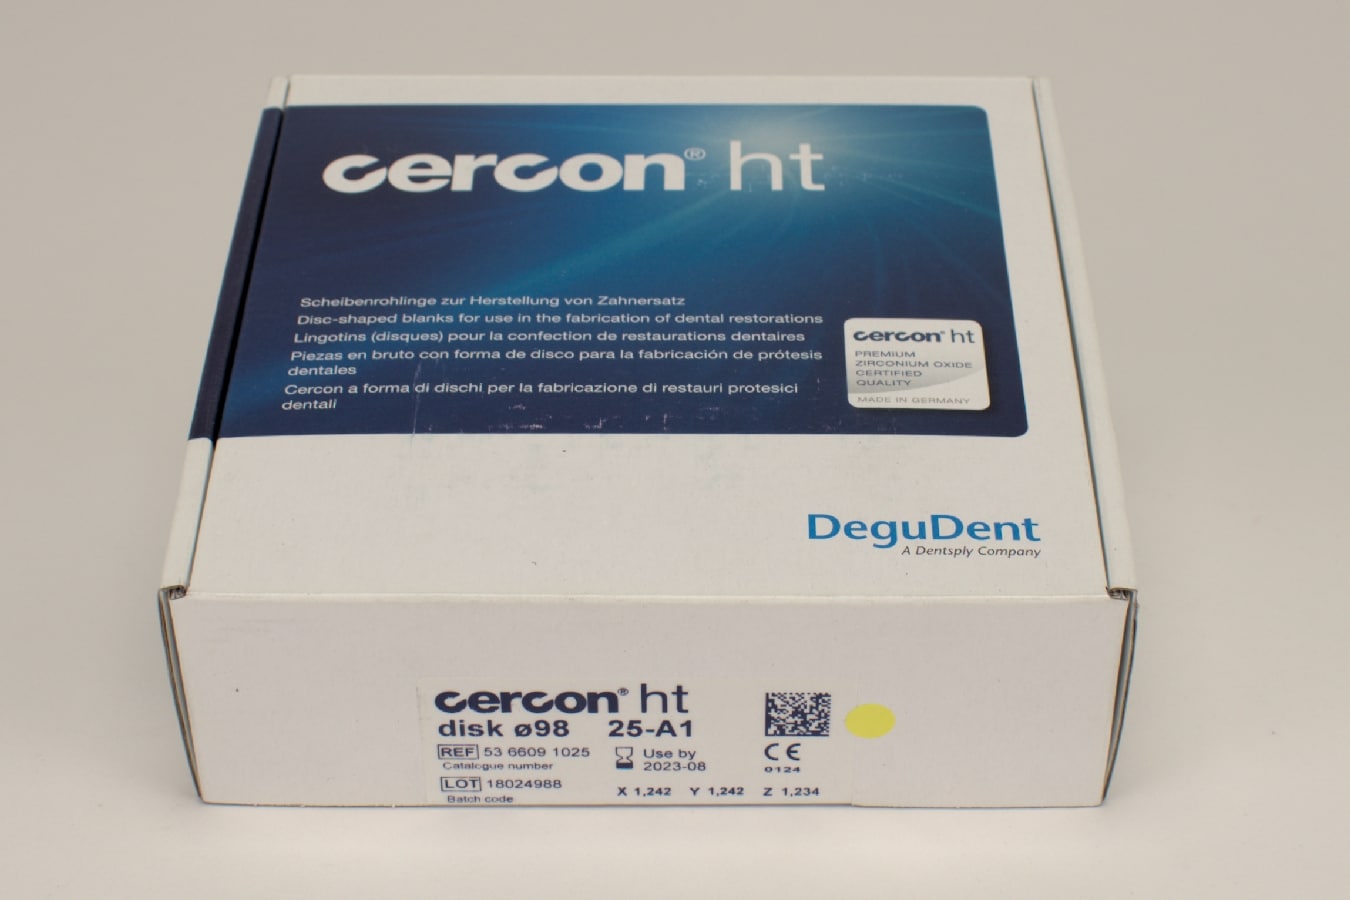 Cercon ht disk A1 ø98 x 25mm